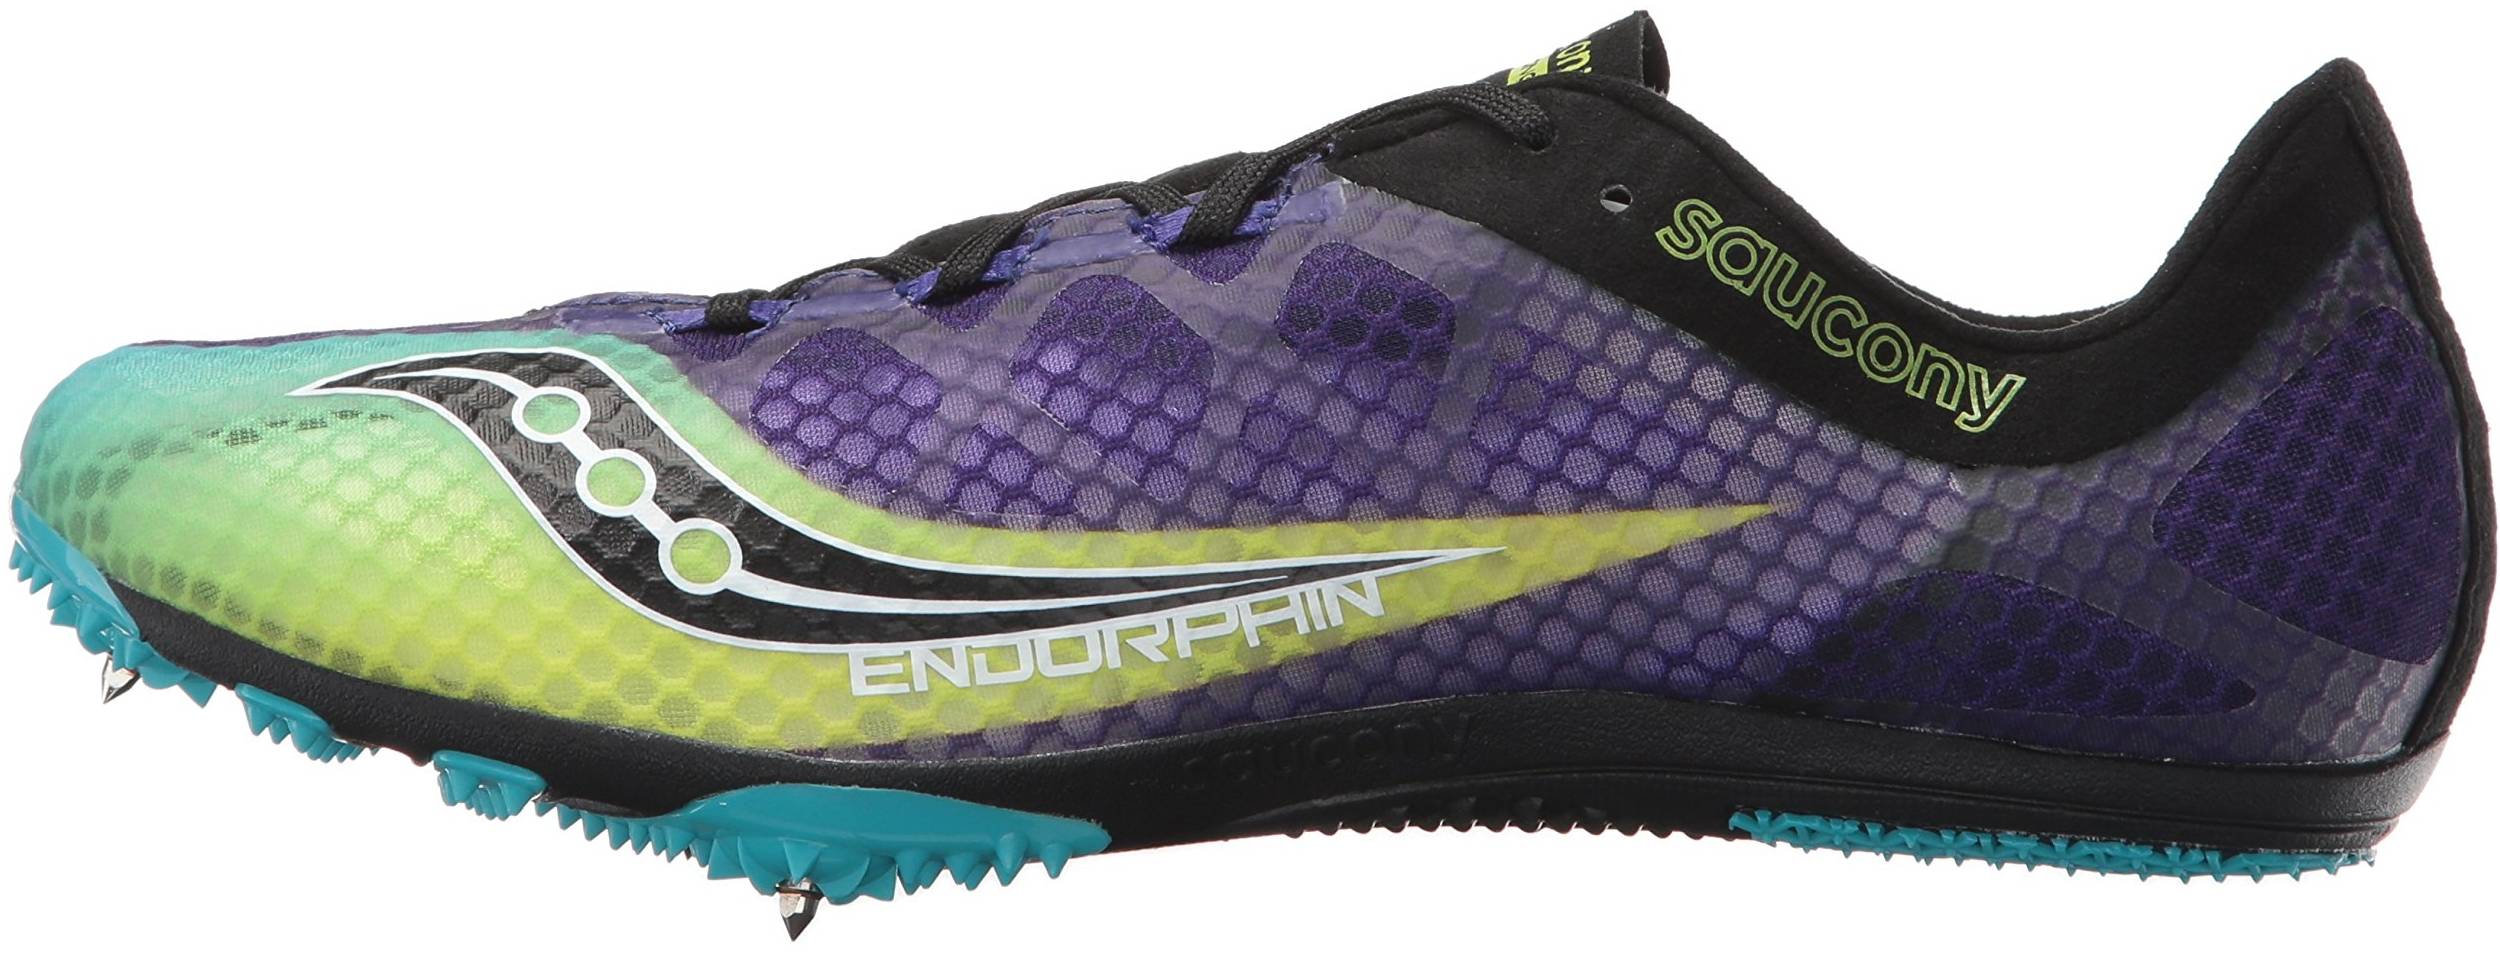 009 SAUCONY Endorphin Track Spike Racing Shoe Men's sizes 11.5-12.5 